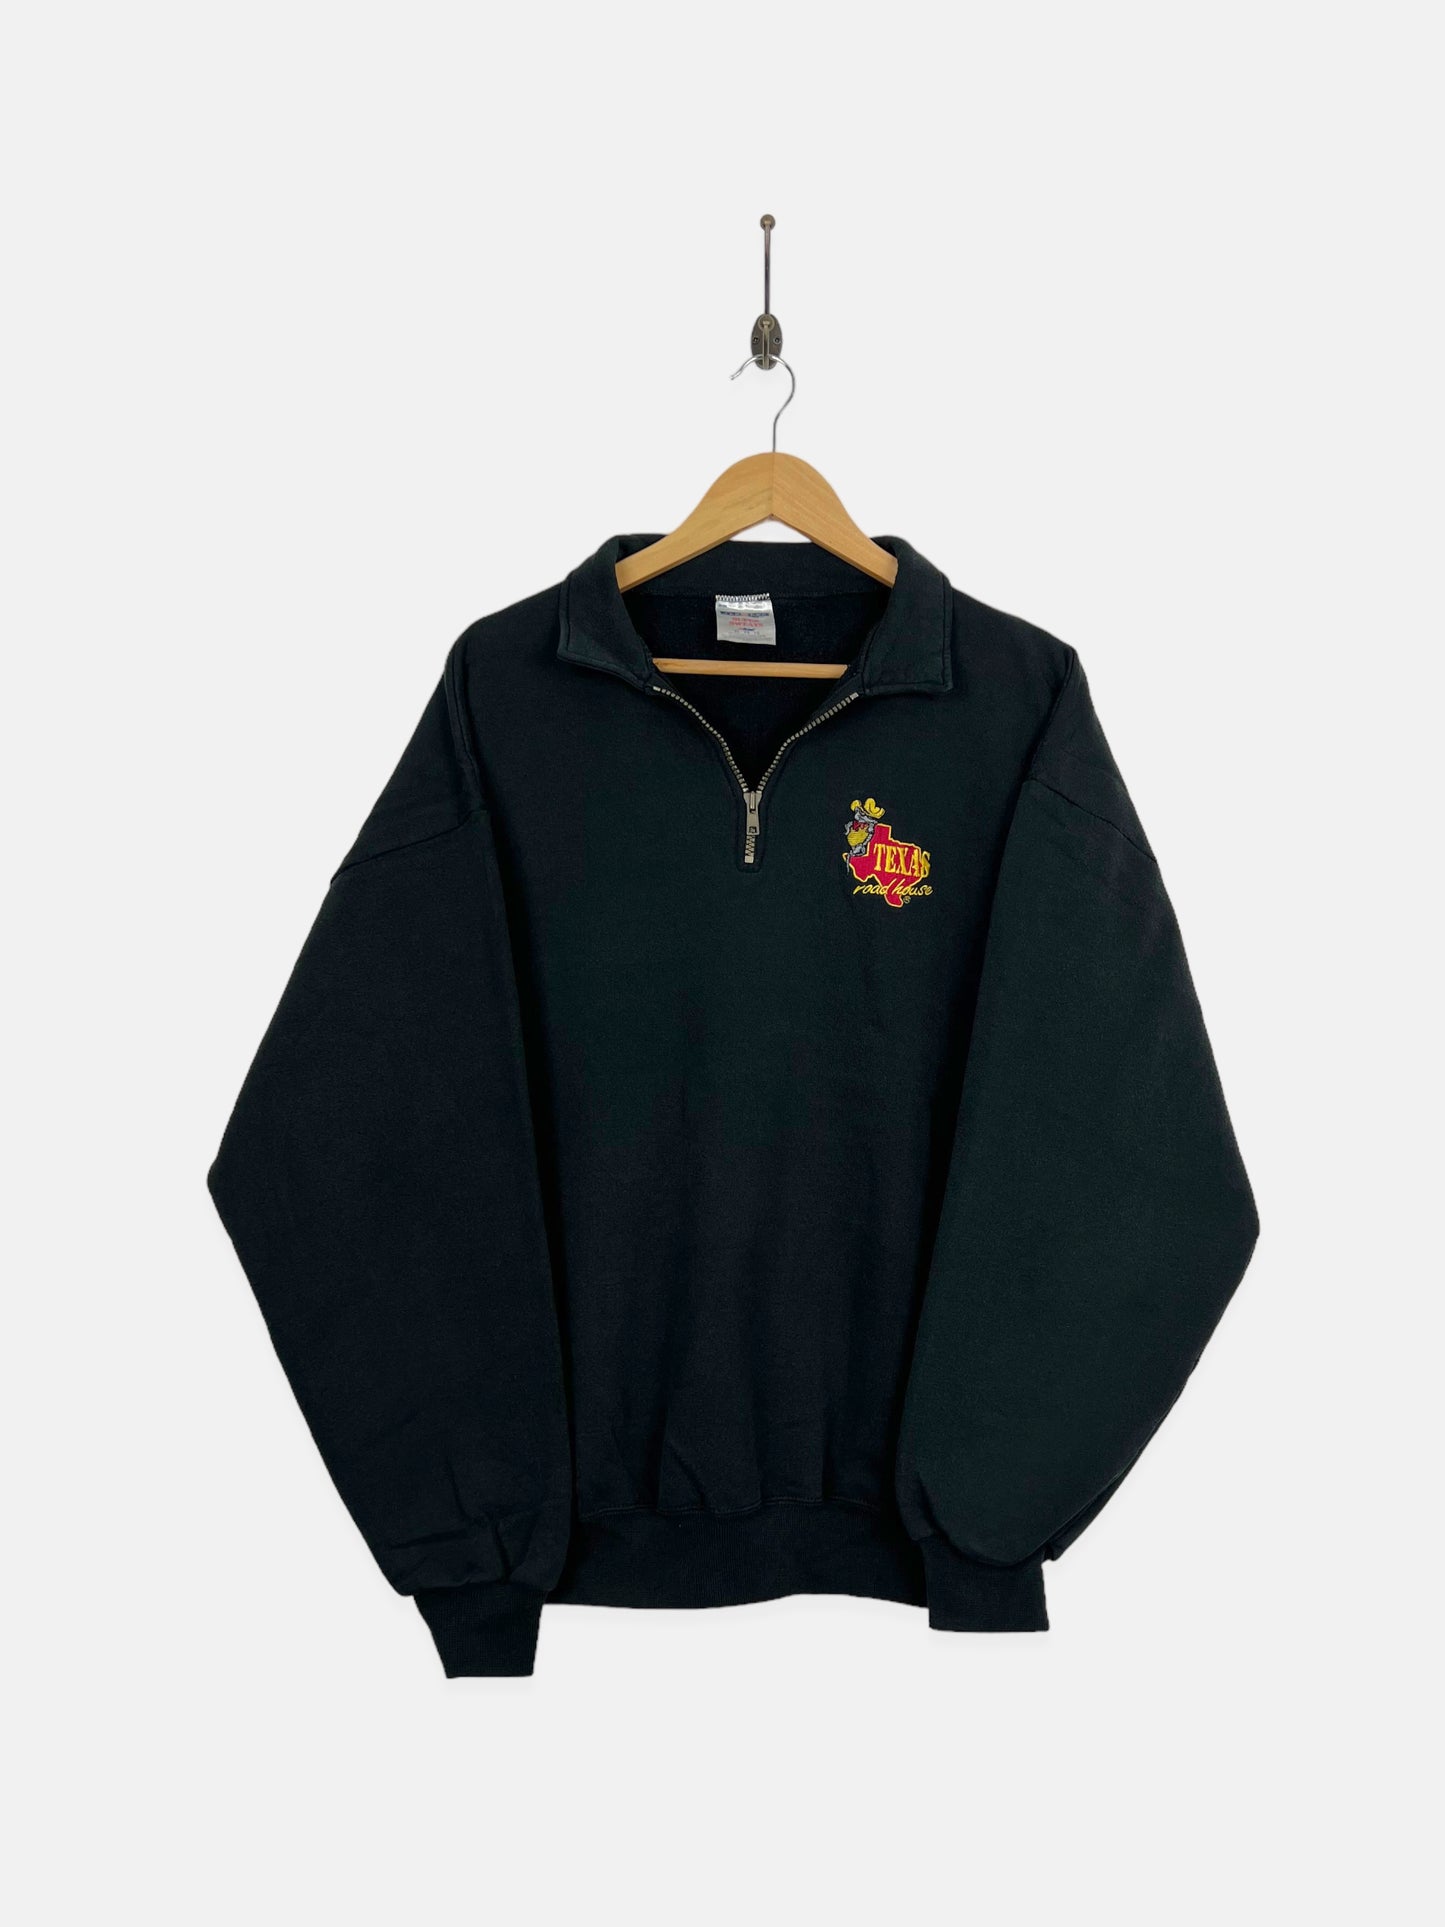 90's Texas Roadhouse Embroidered Vintage Quarterzip Sweatshirt Size M-L